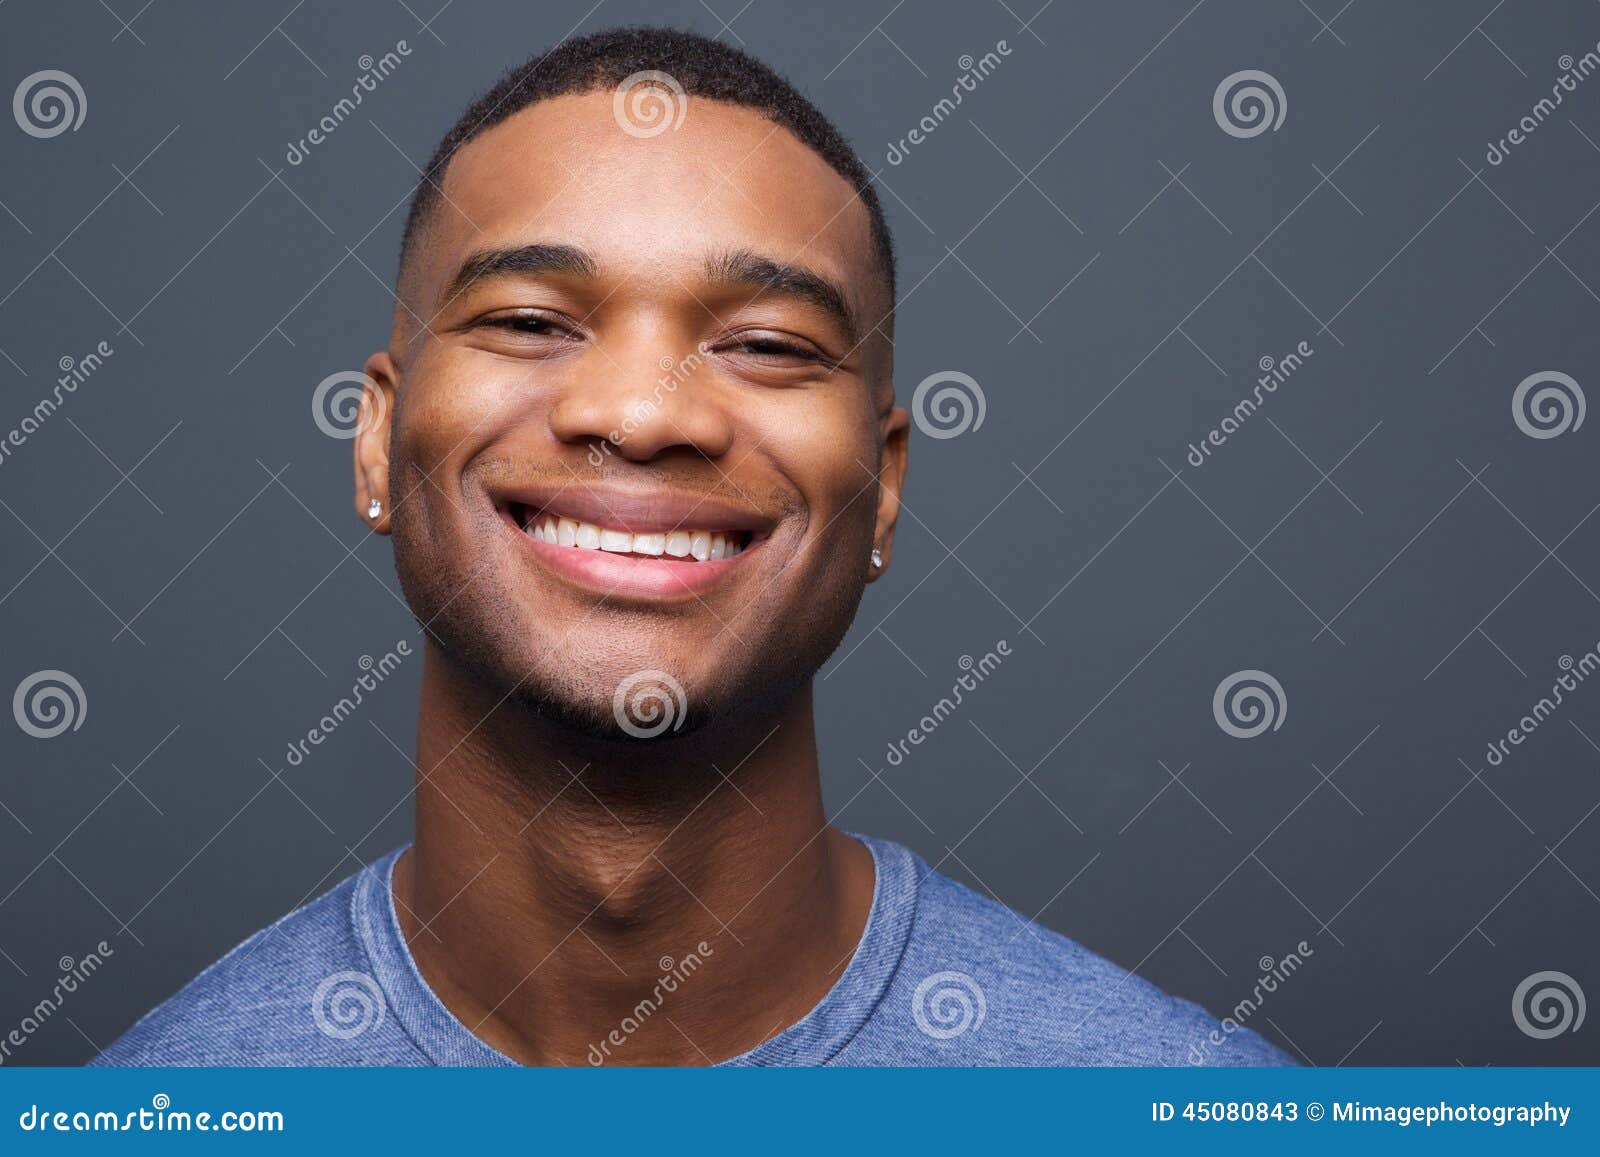 happy black man smiling on gray background